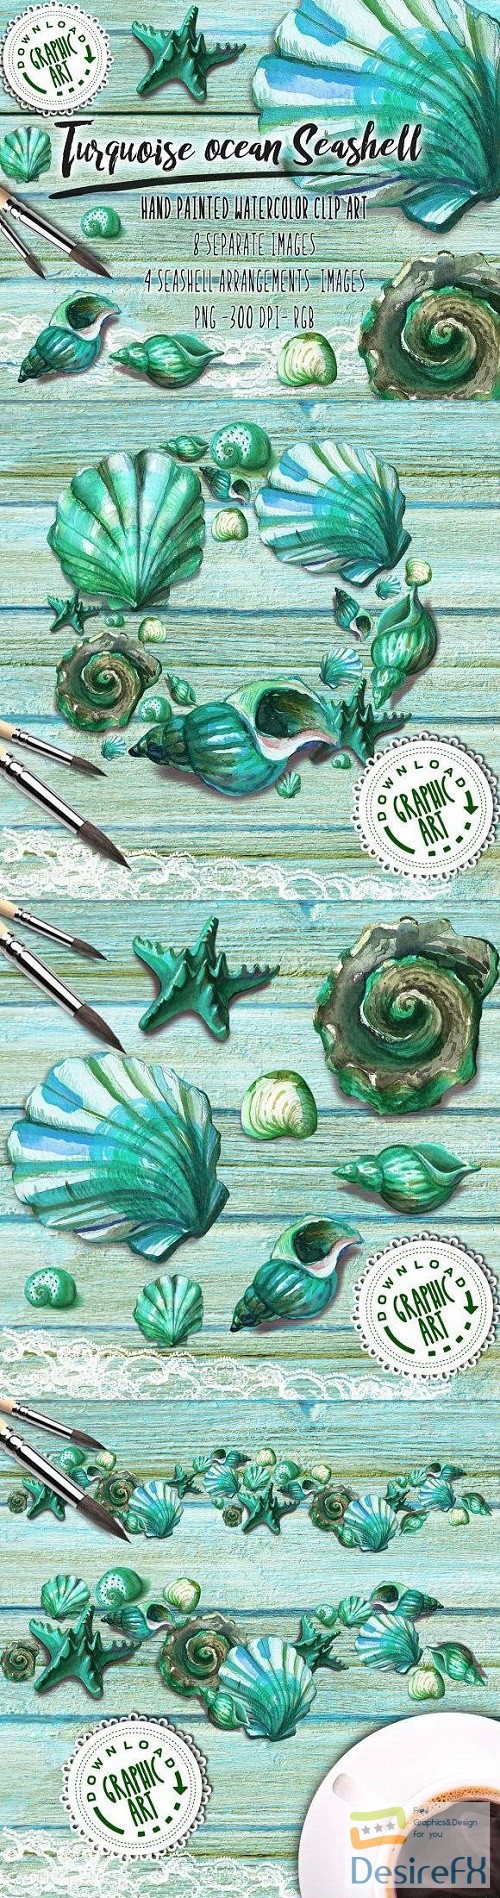 Watercolor clipart Seashell wreath 2390589